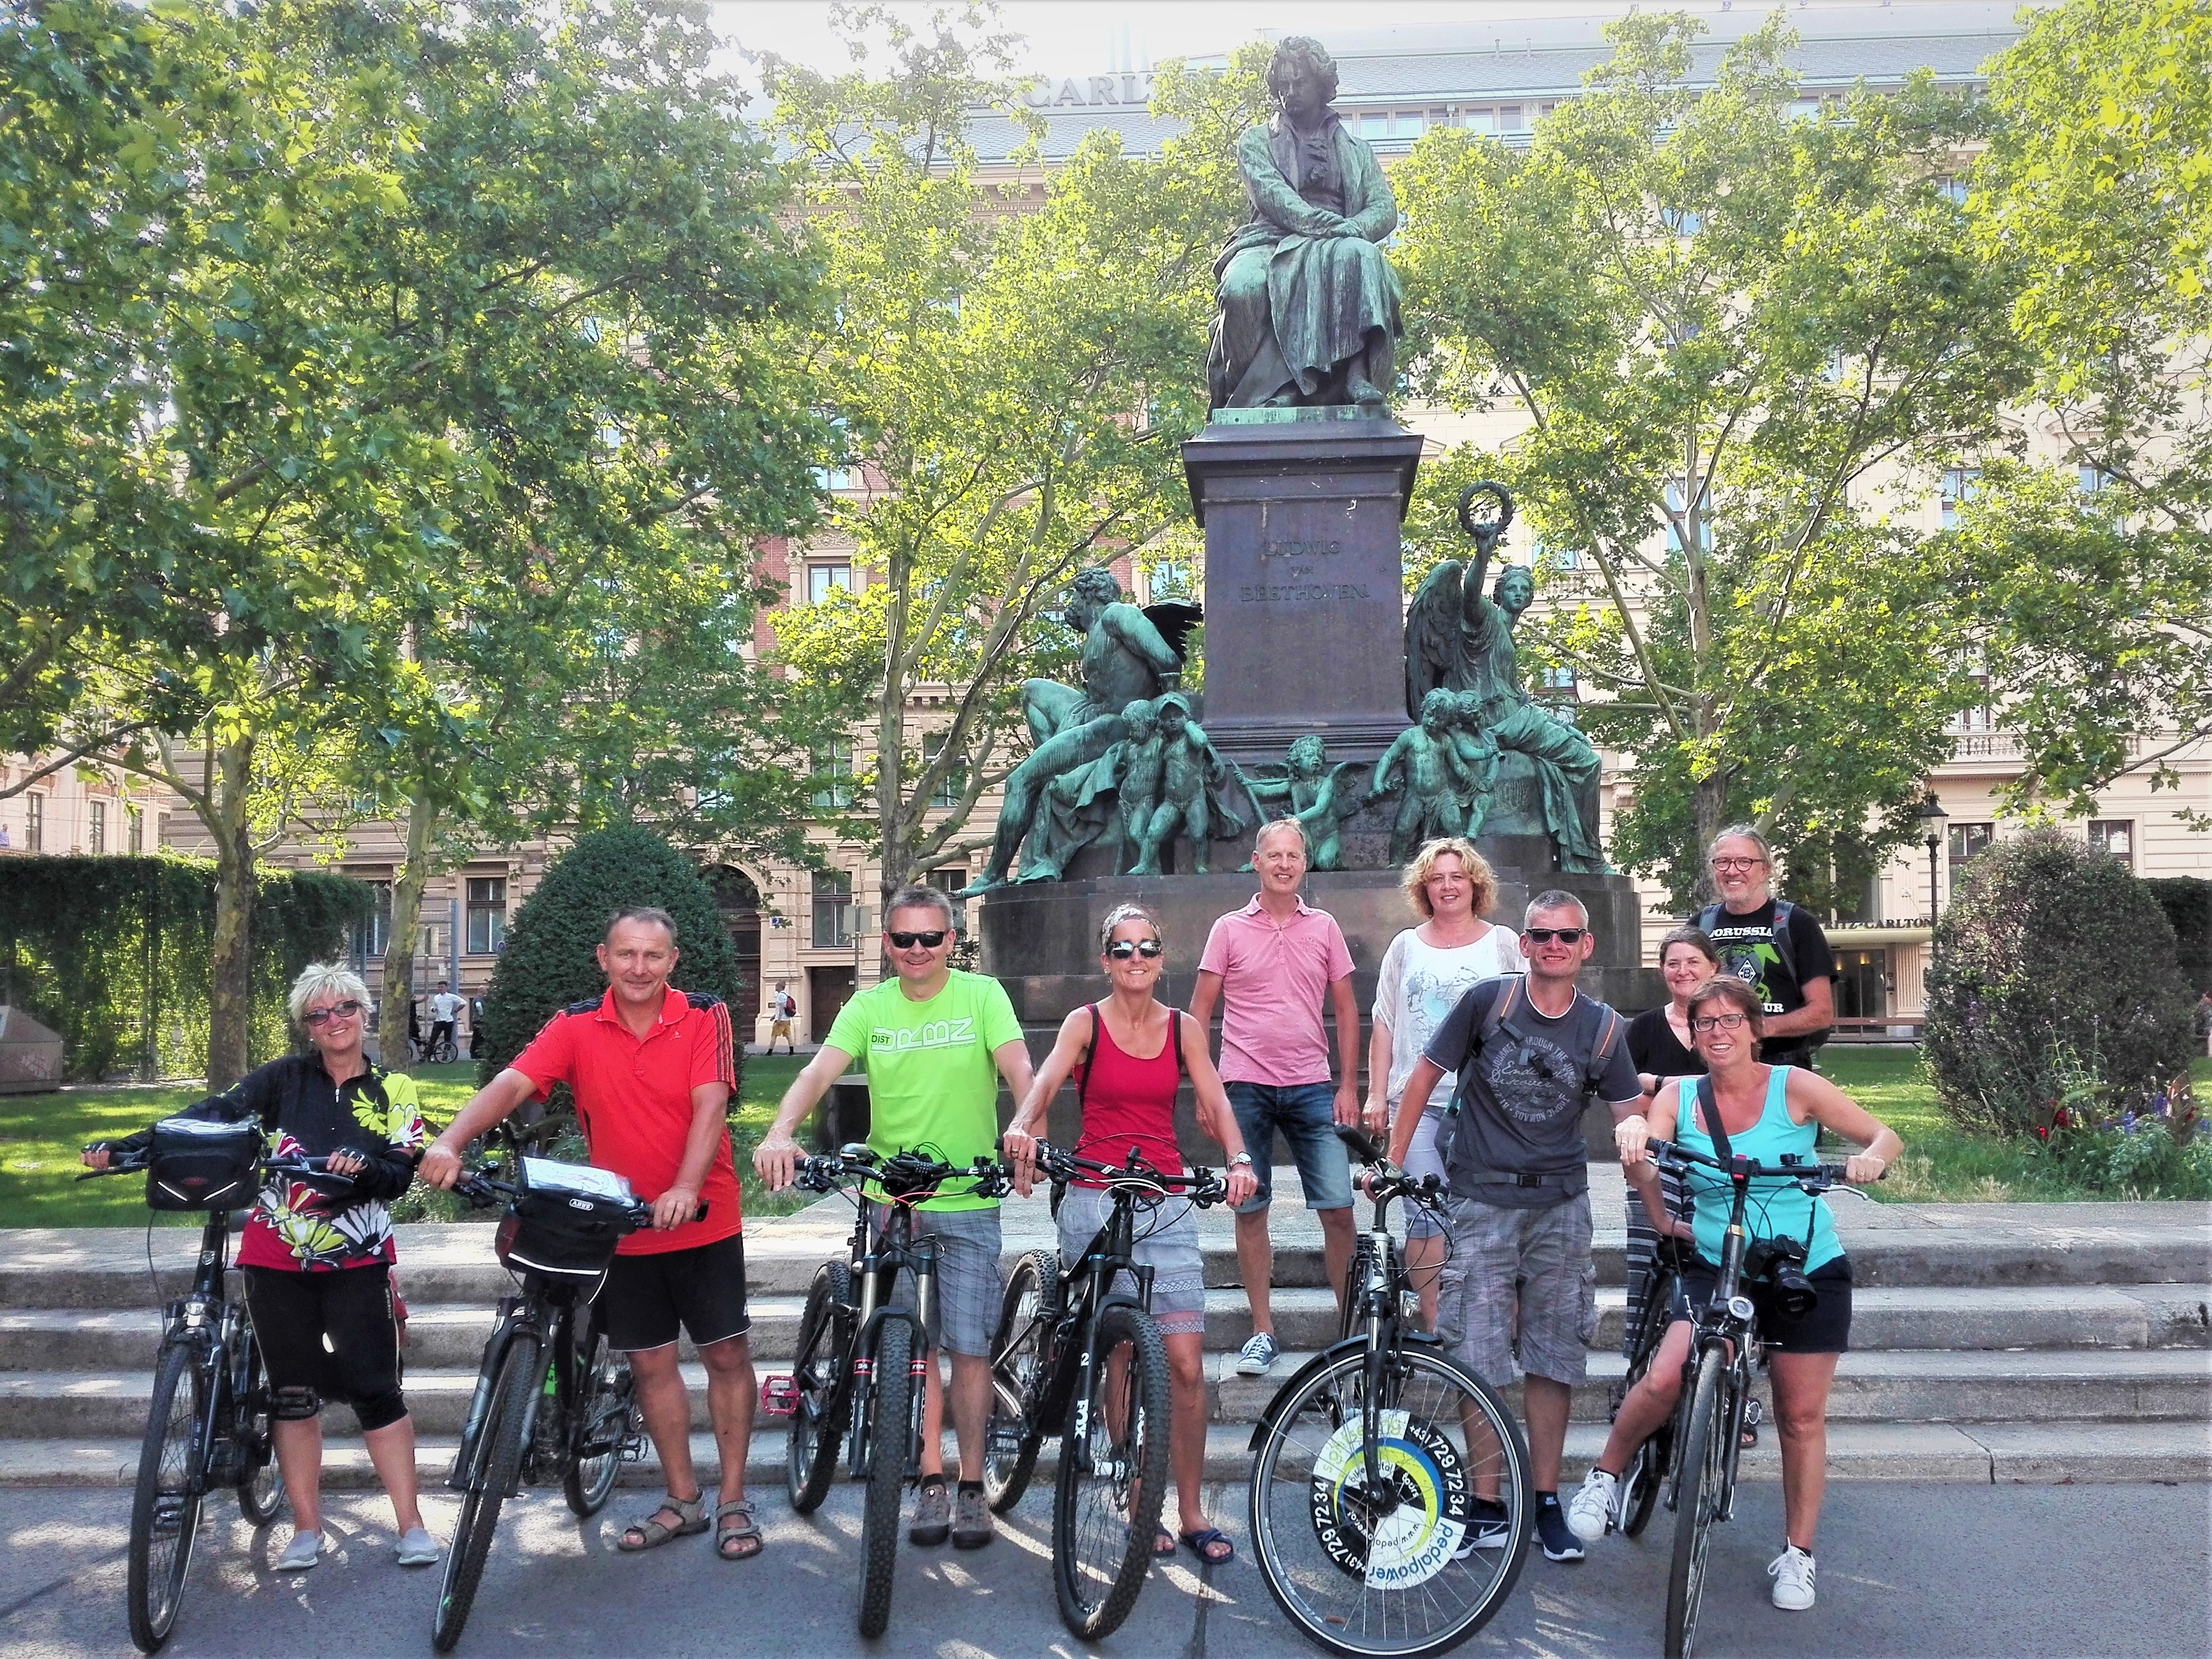 Grupo en bicicleta delante de la estatua de Beethoven